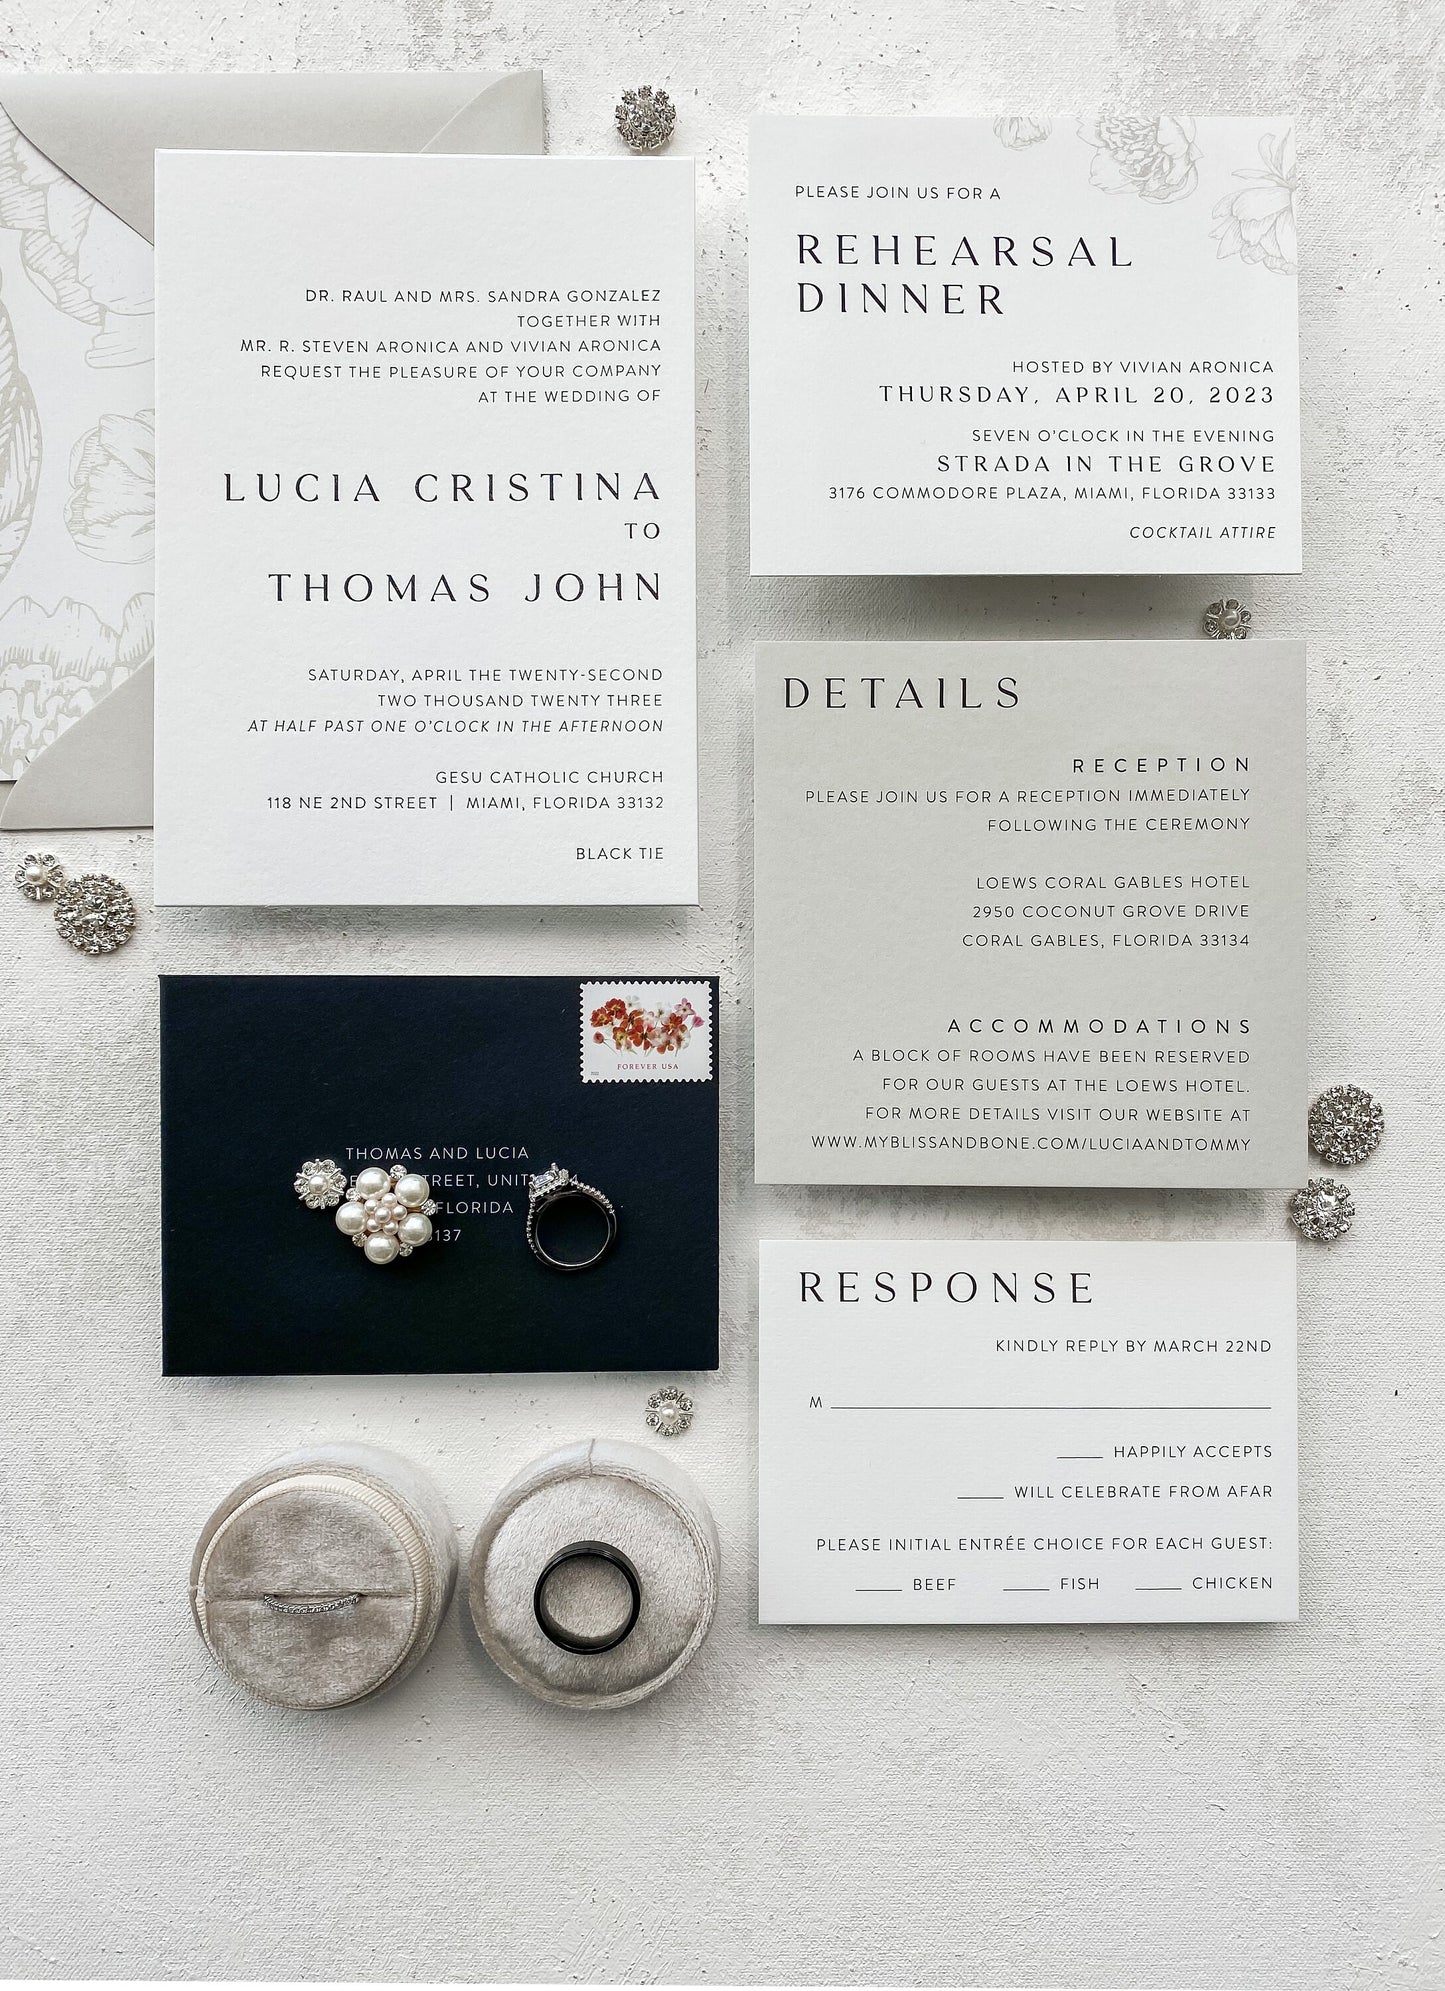 Modern Letterpress Invitations | black and white Wedding Invitations -  Style 900